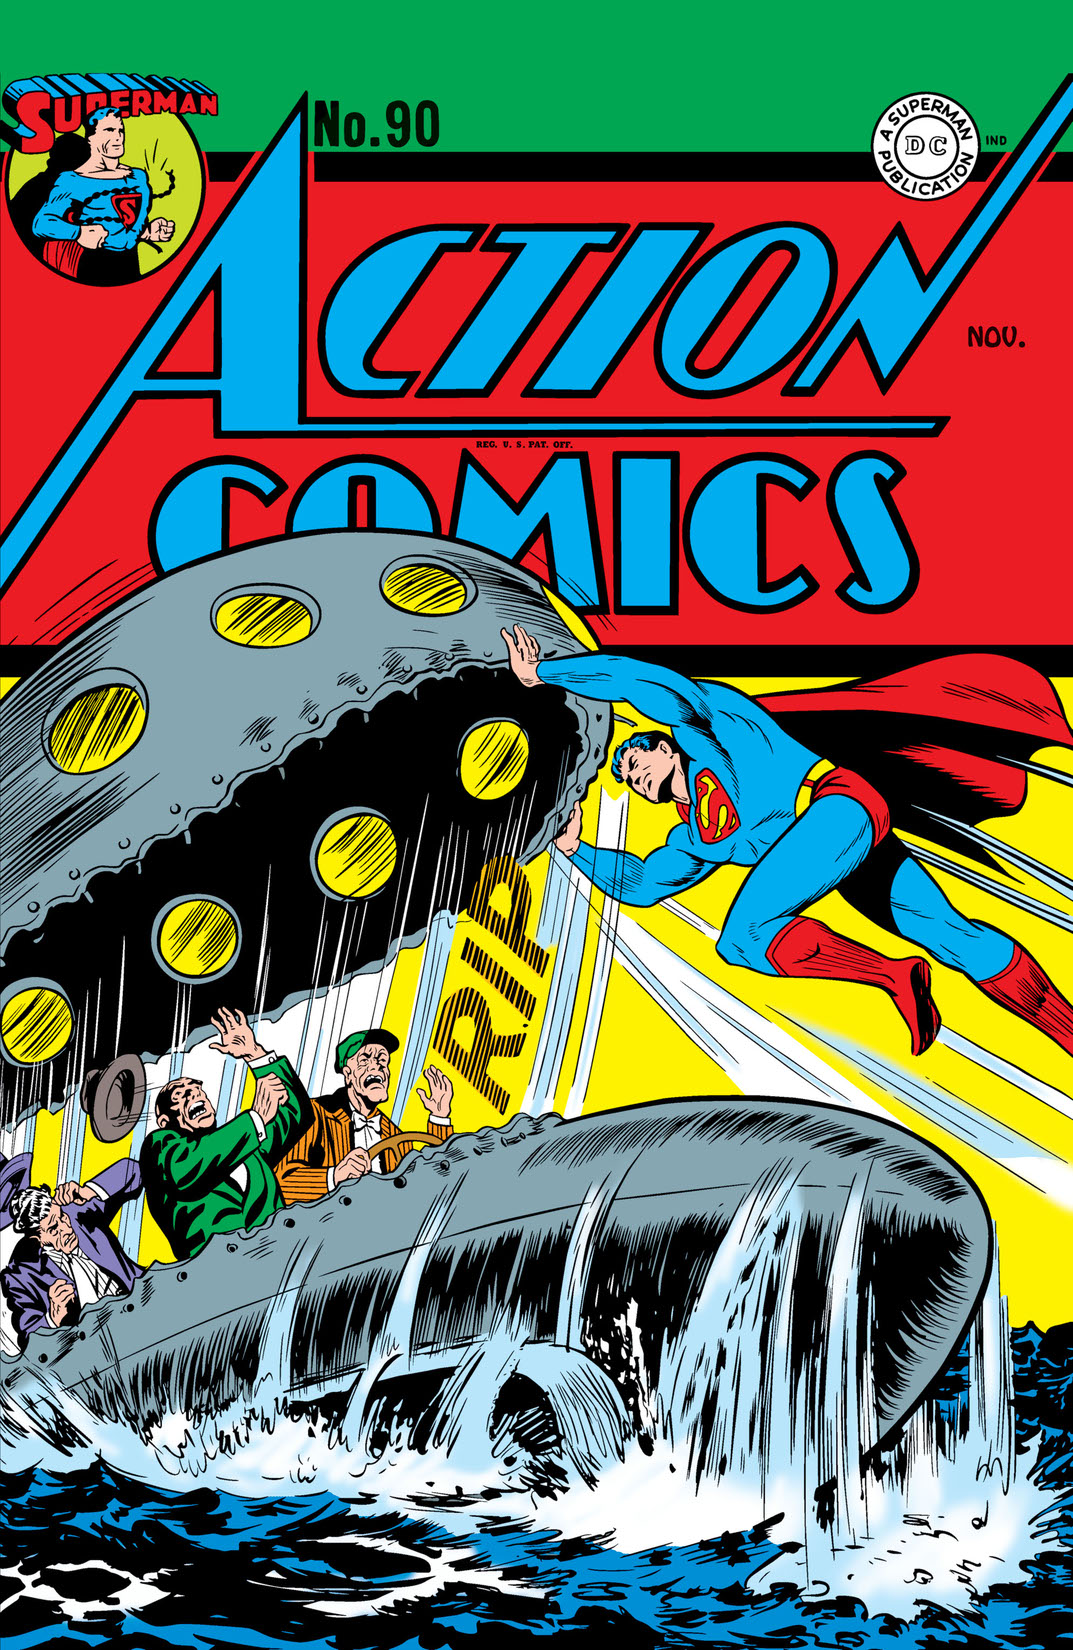 Action Comics (1938-) #90 preview images